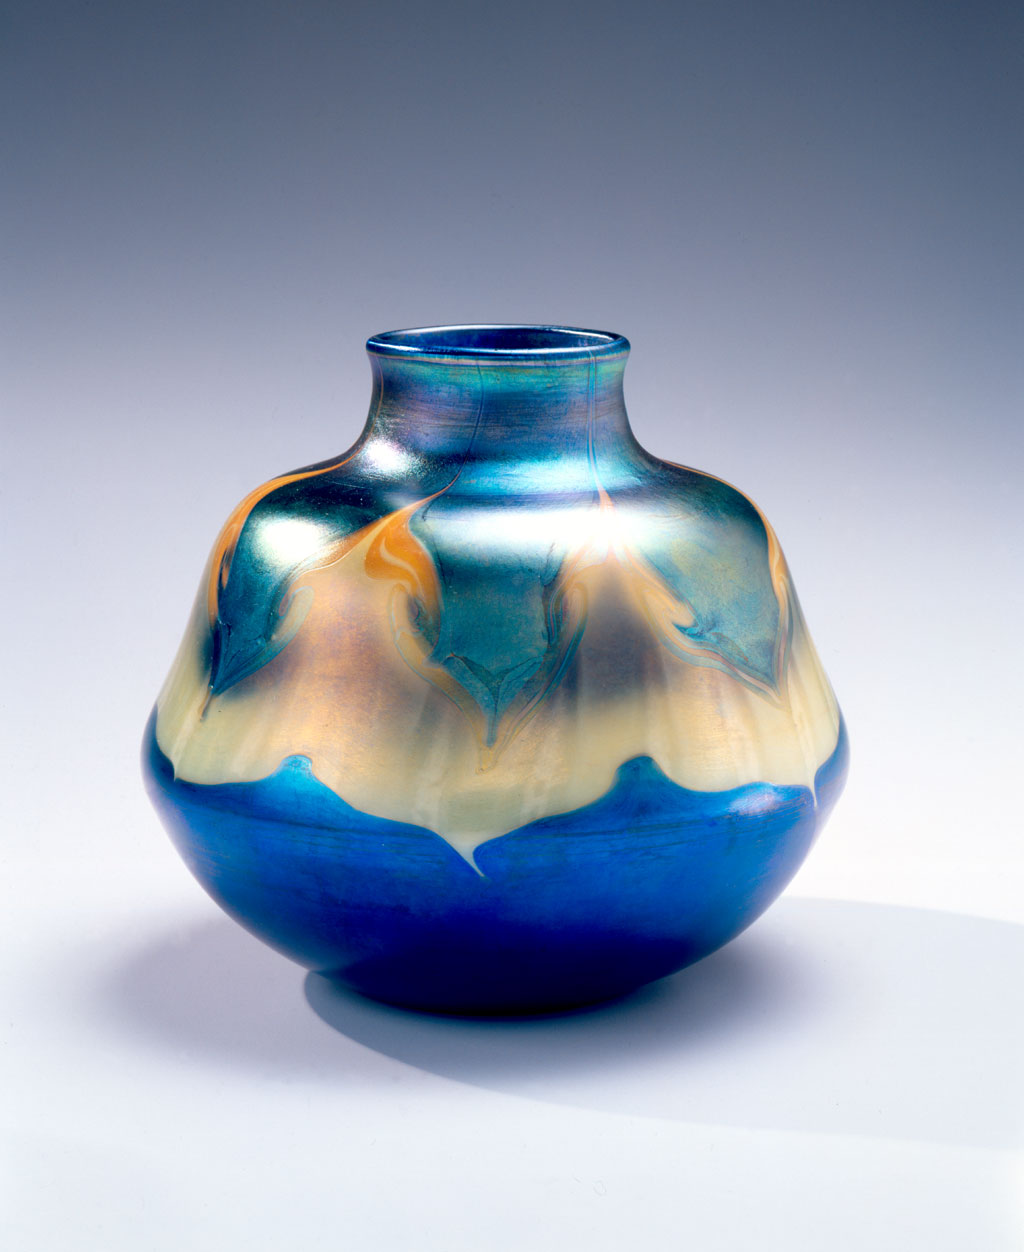 Louis Comfort Tiffany, Vase, 1901-1905, Courtesy of the Newark Museum